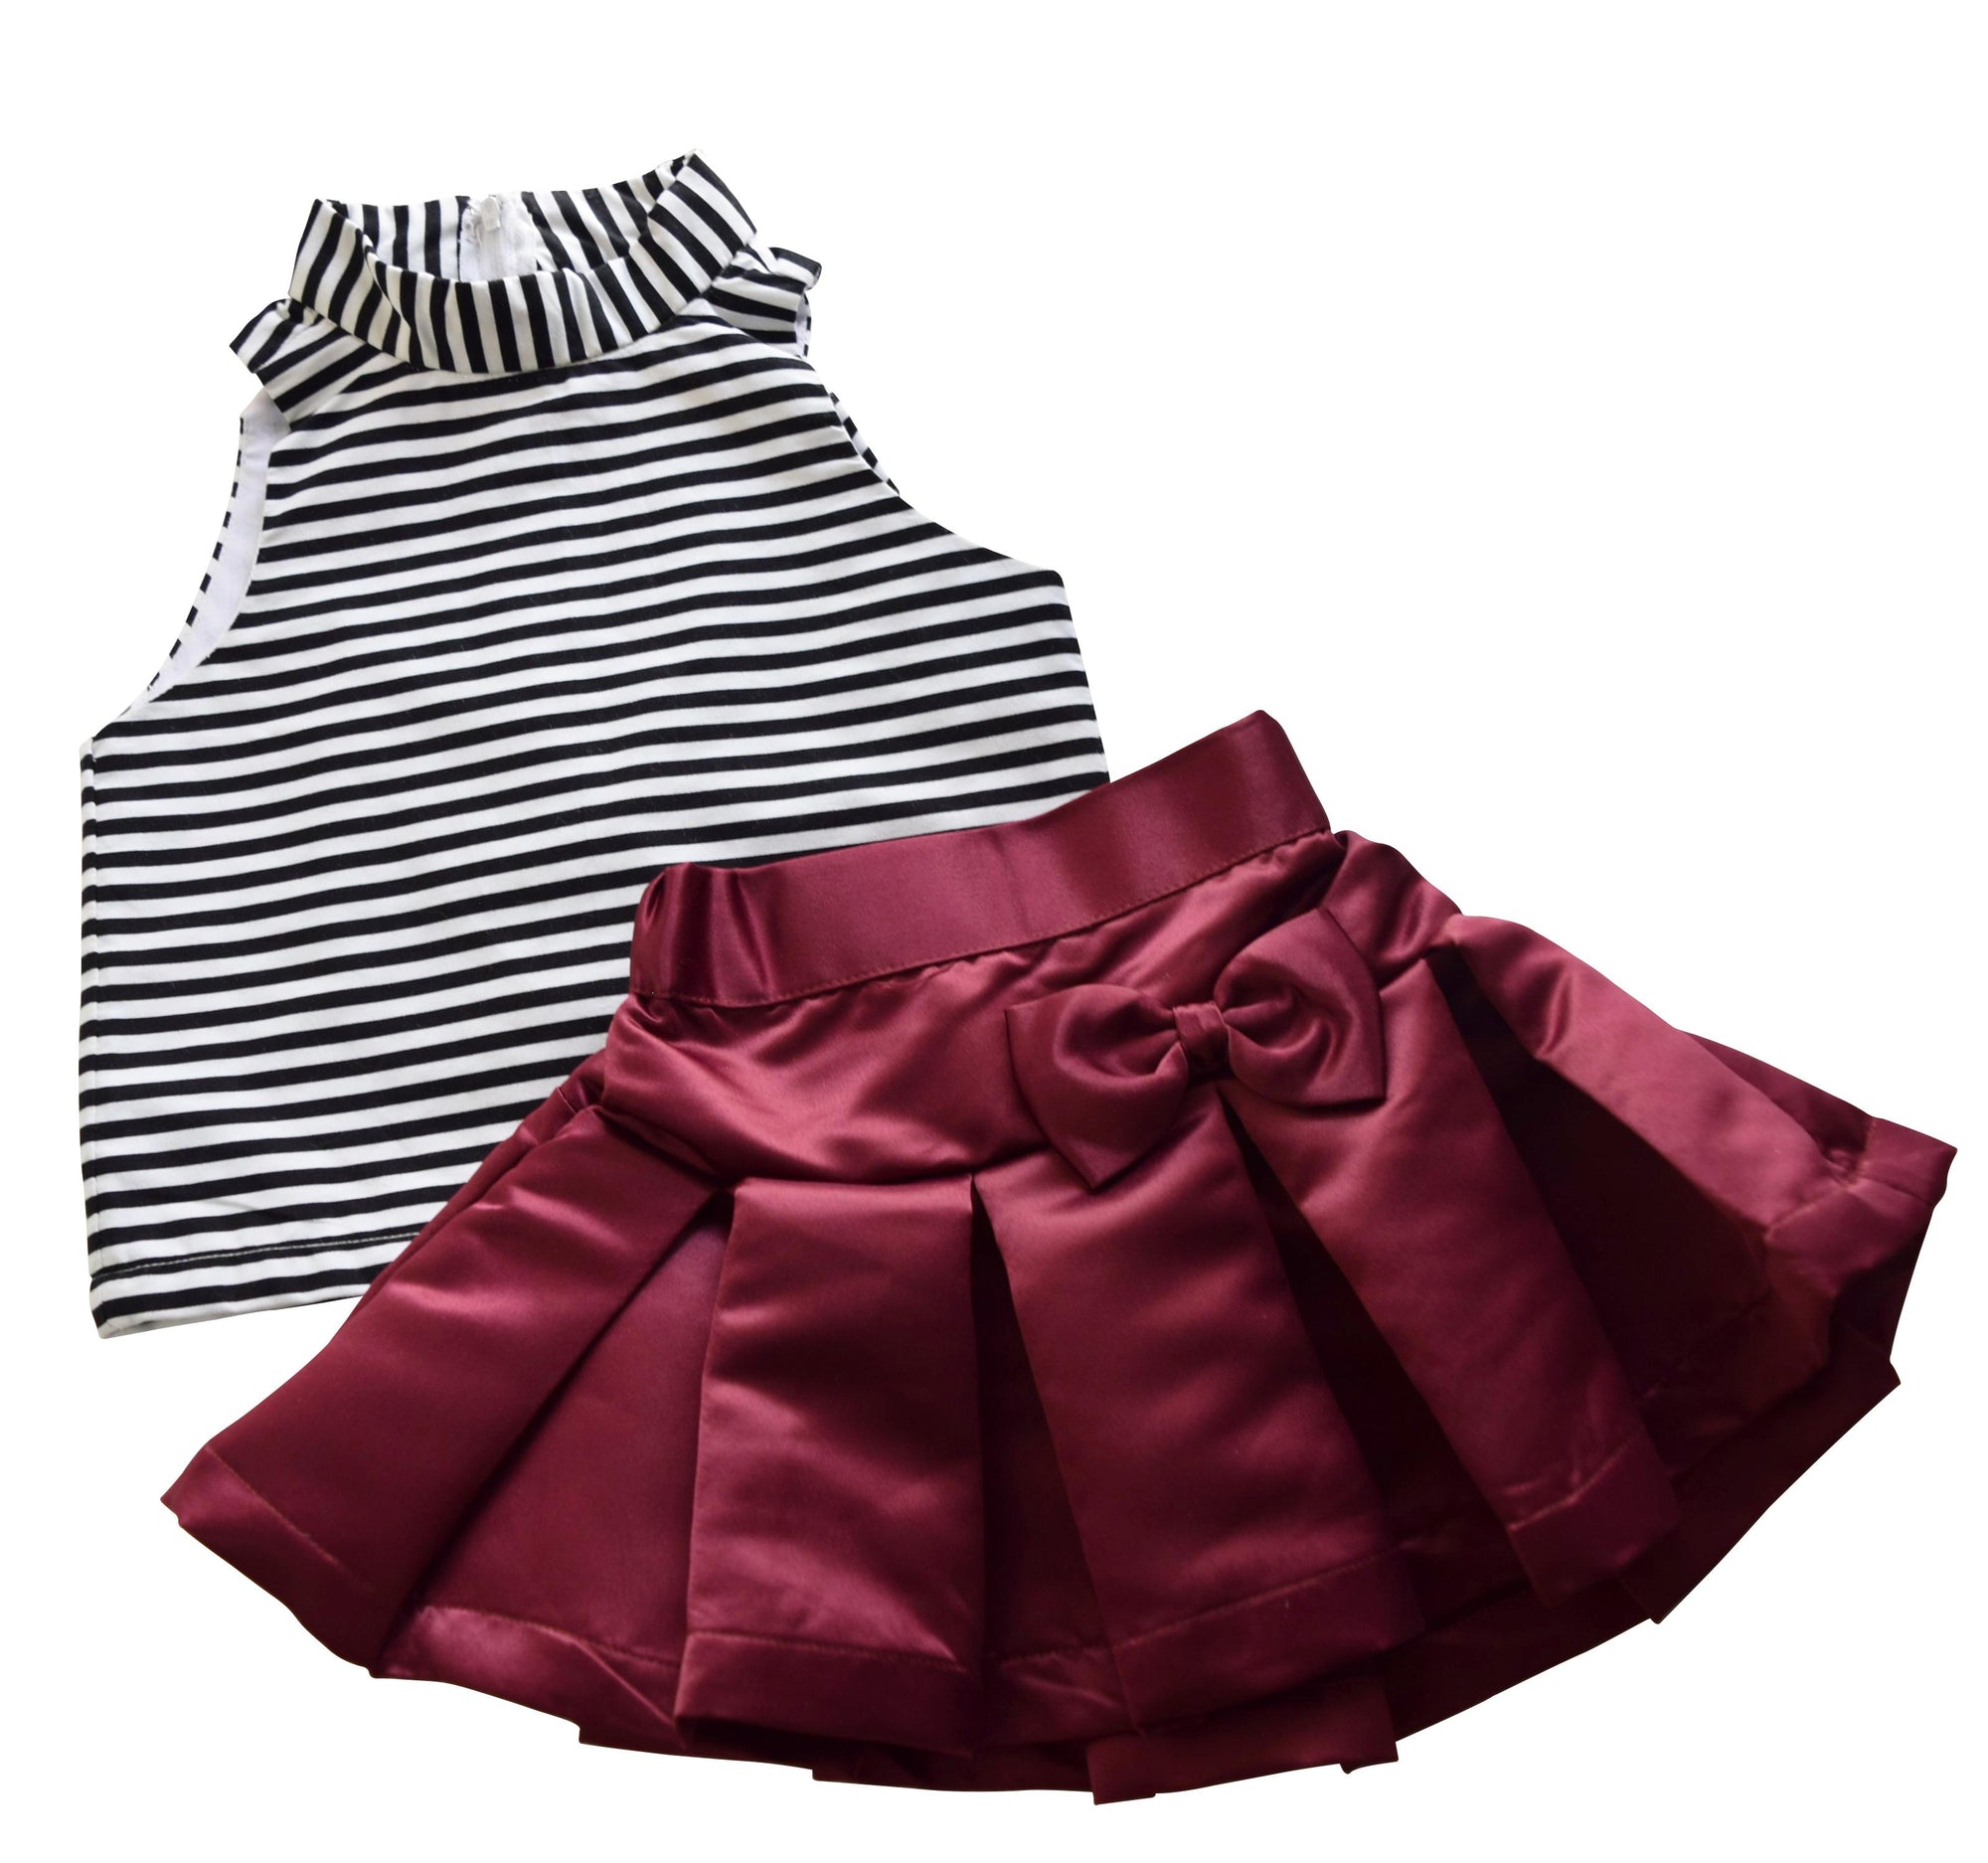 Burgundy Satin Skirt & Striped Top